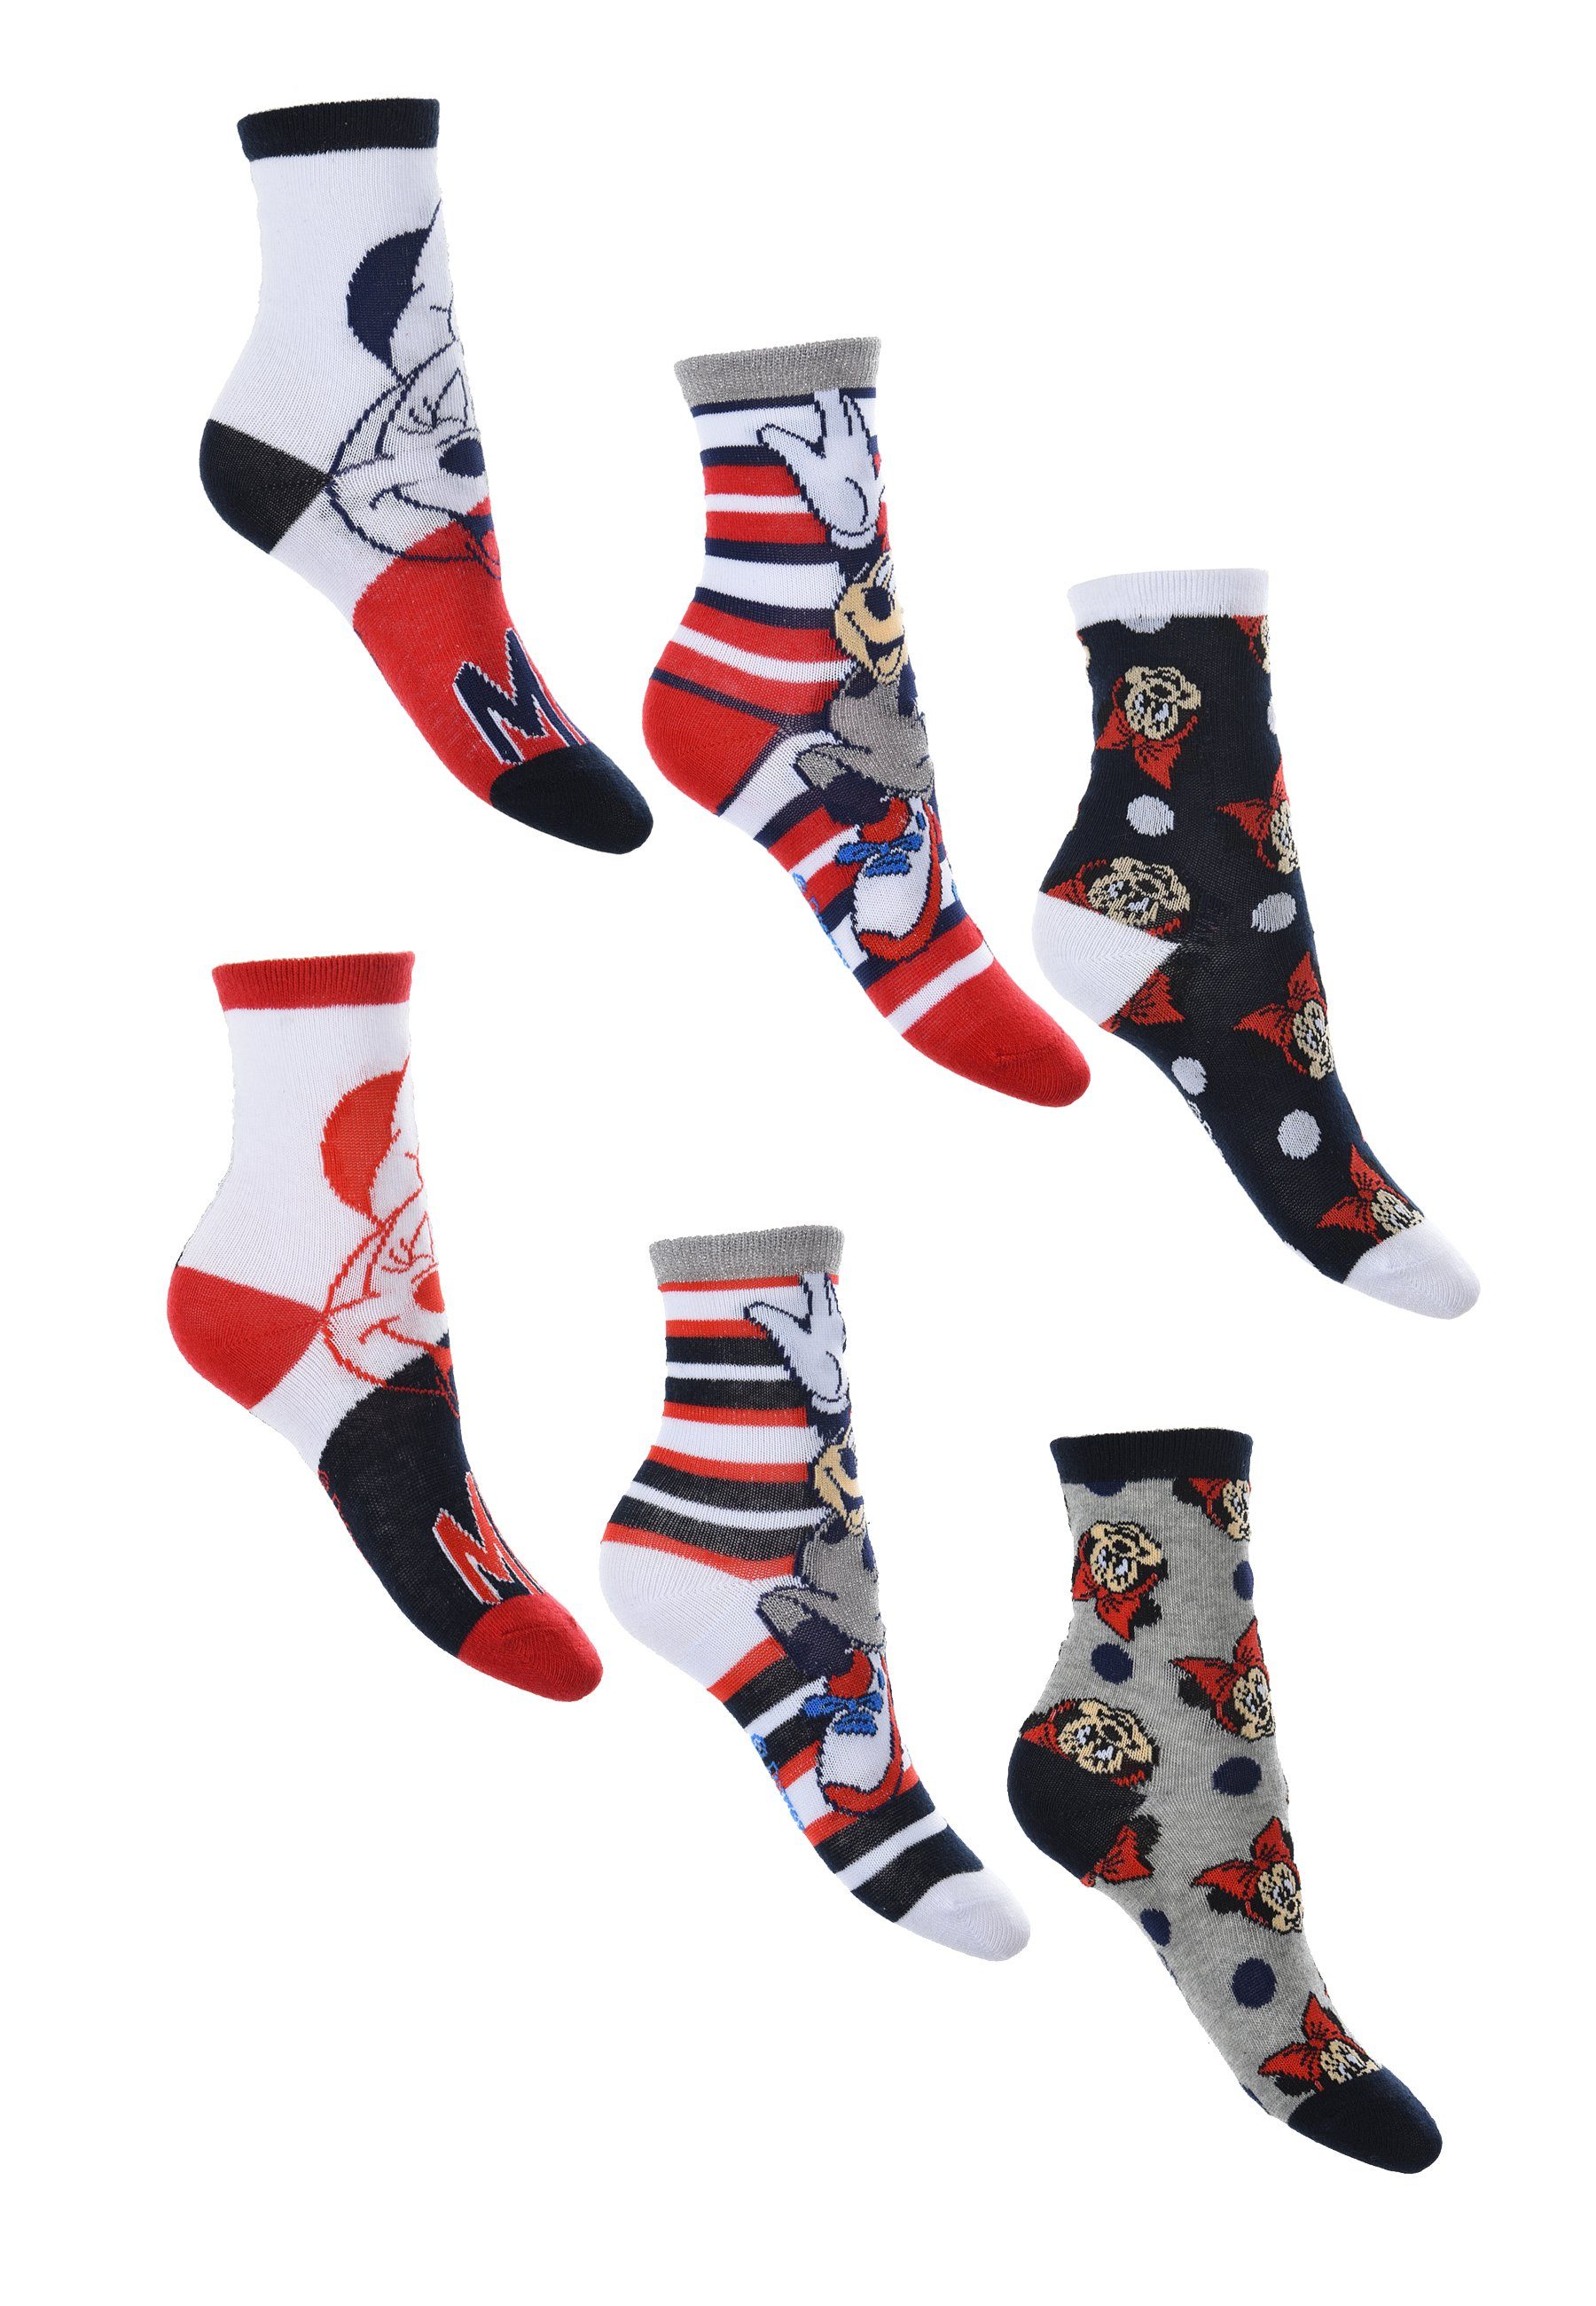 Disney Minnie Mouse Socken Kinder Mädchen Strümpfe Socken (6-Paar) | Socken